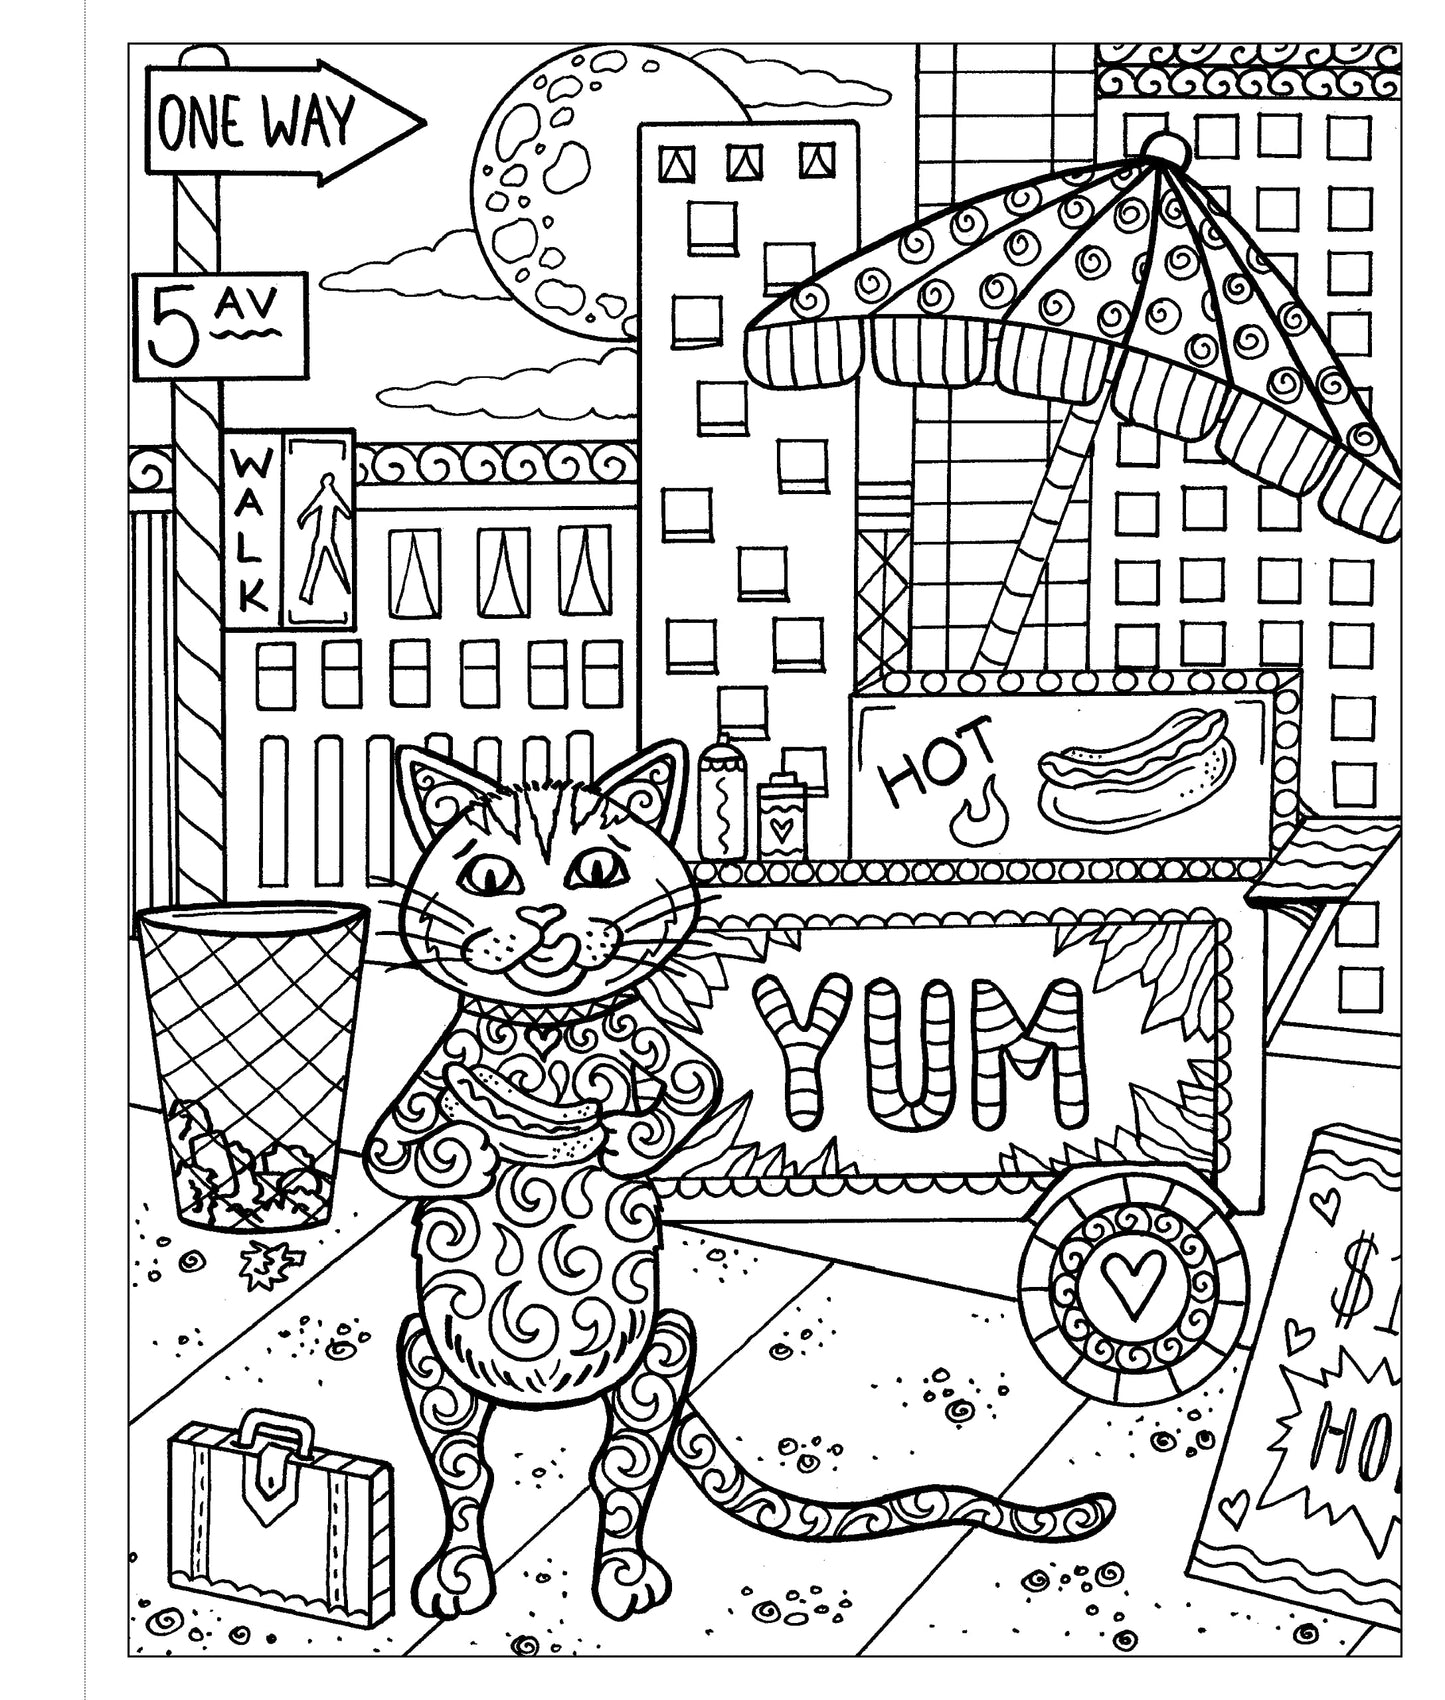 Kitties in Cities Coloring Book